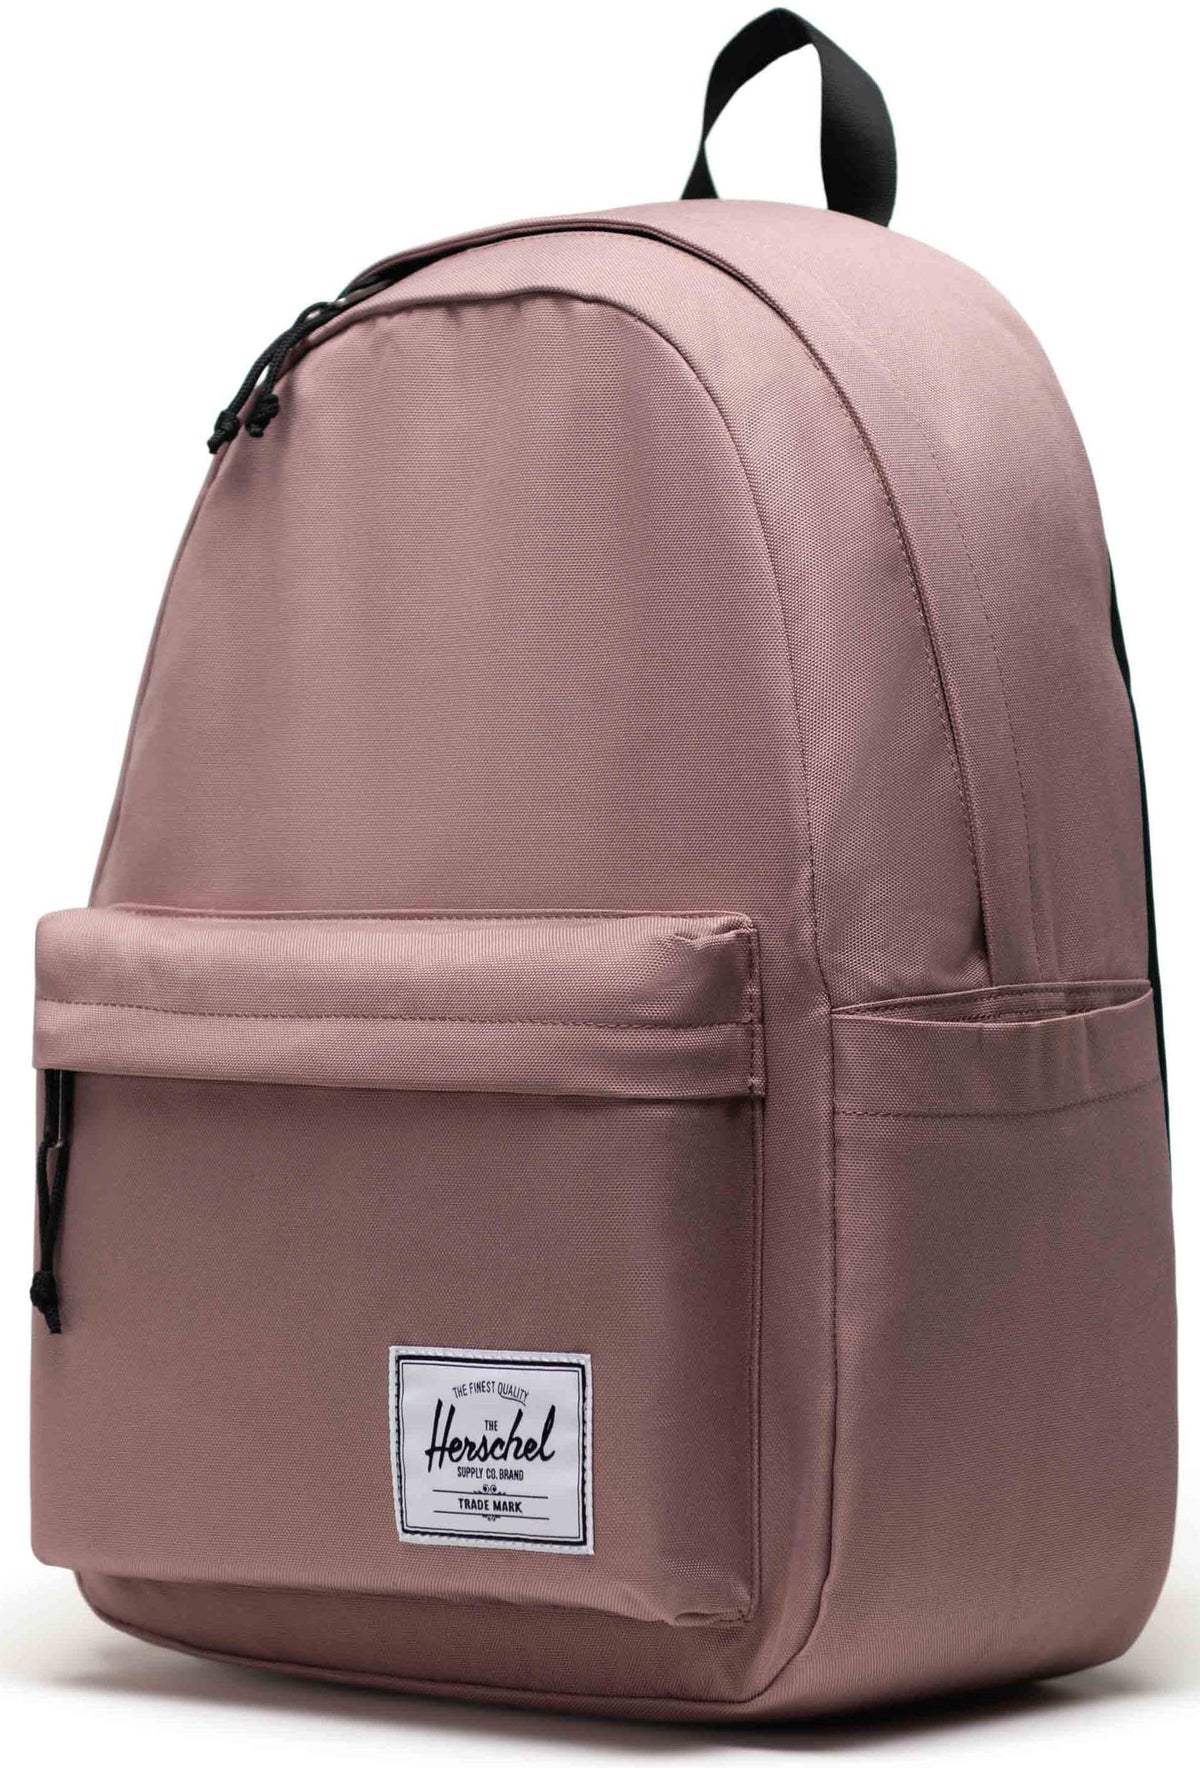 Herschel Classic X-Large Backpack - Ash Rose